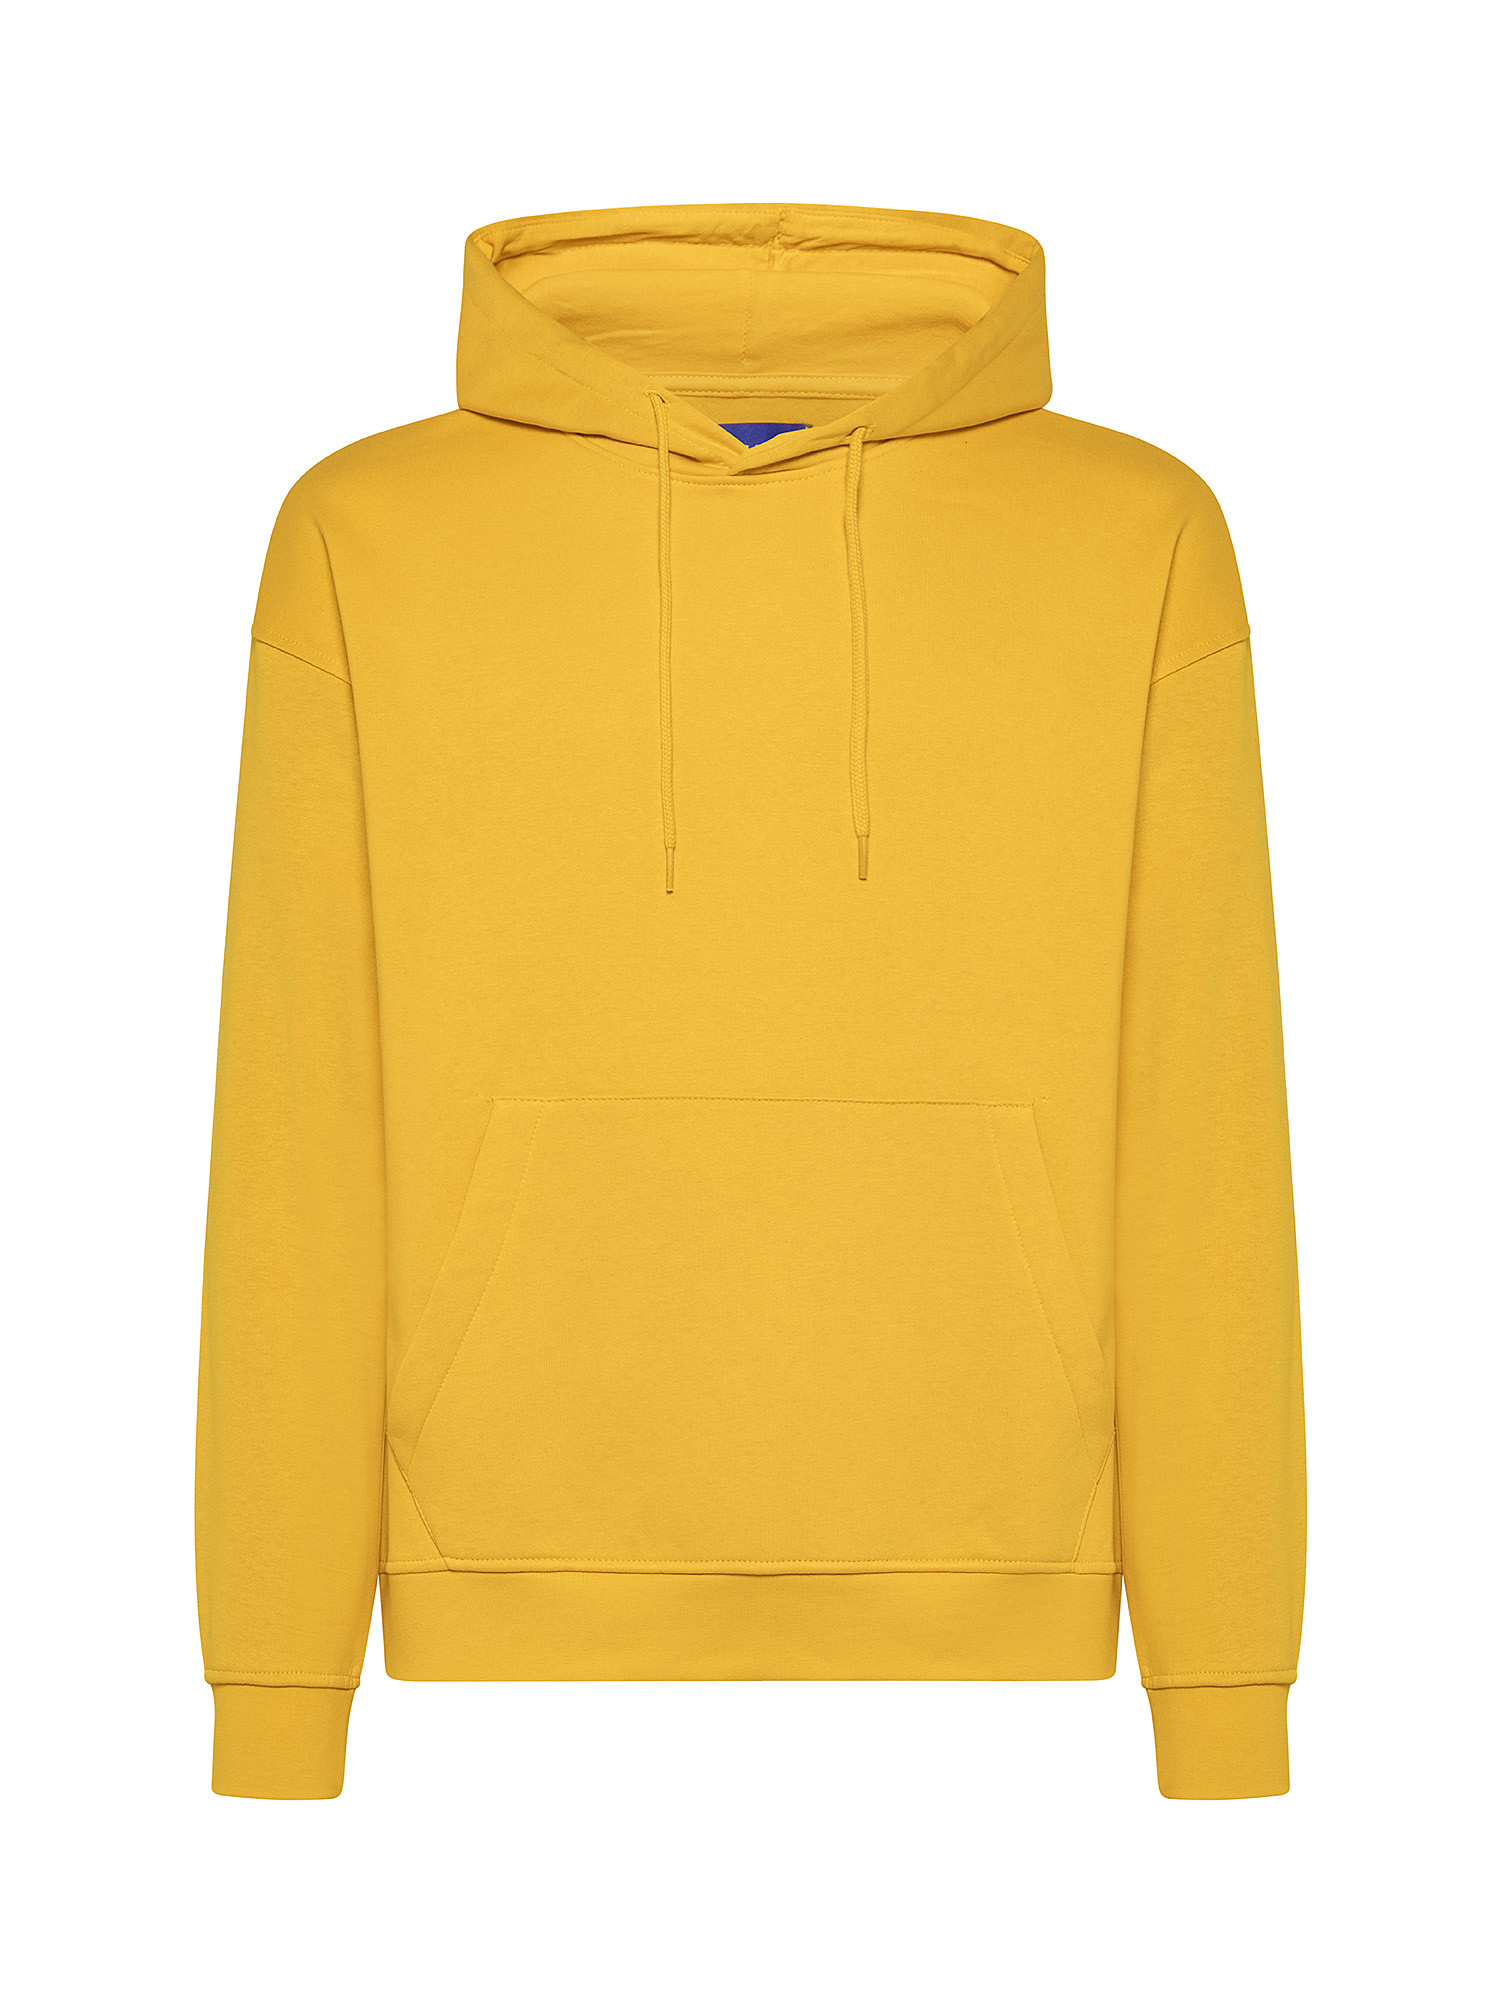 Sweatshirt with hood and long sleeves, Yellow, large image number 0